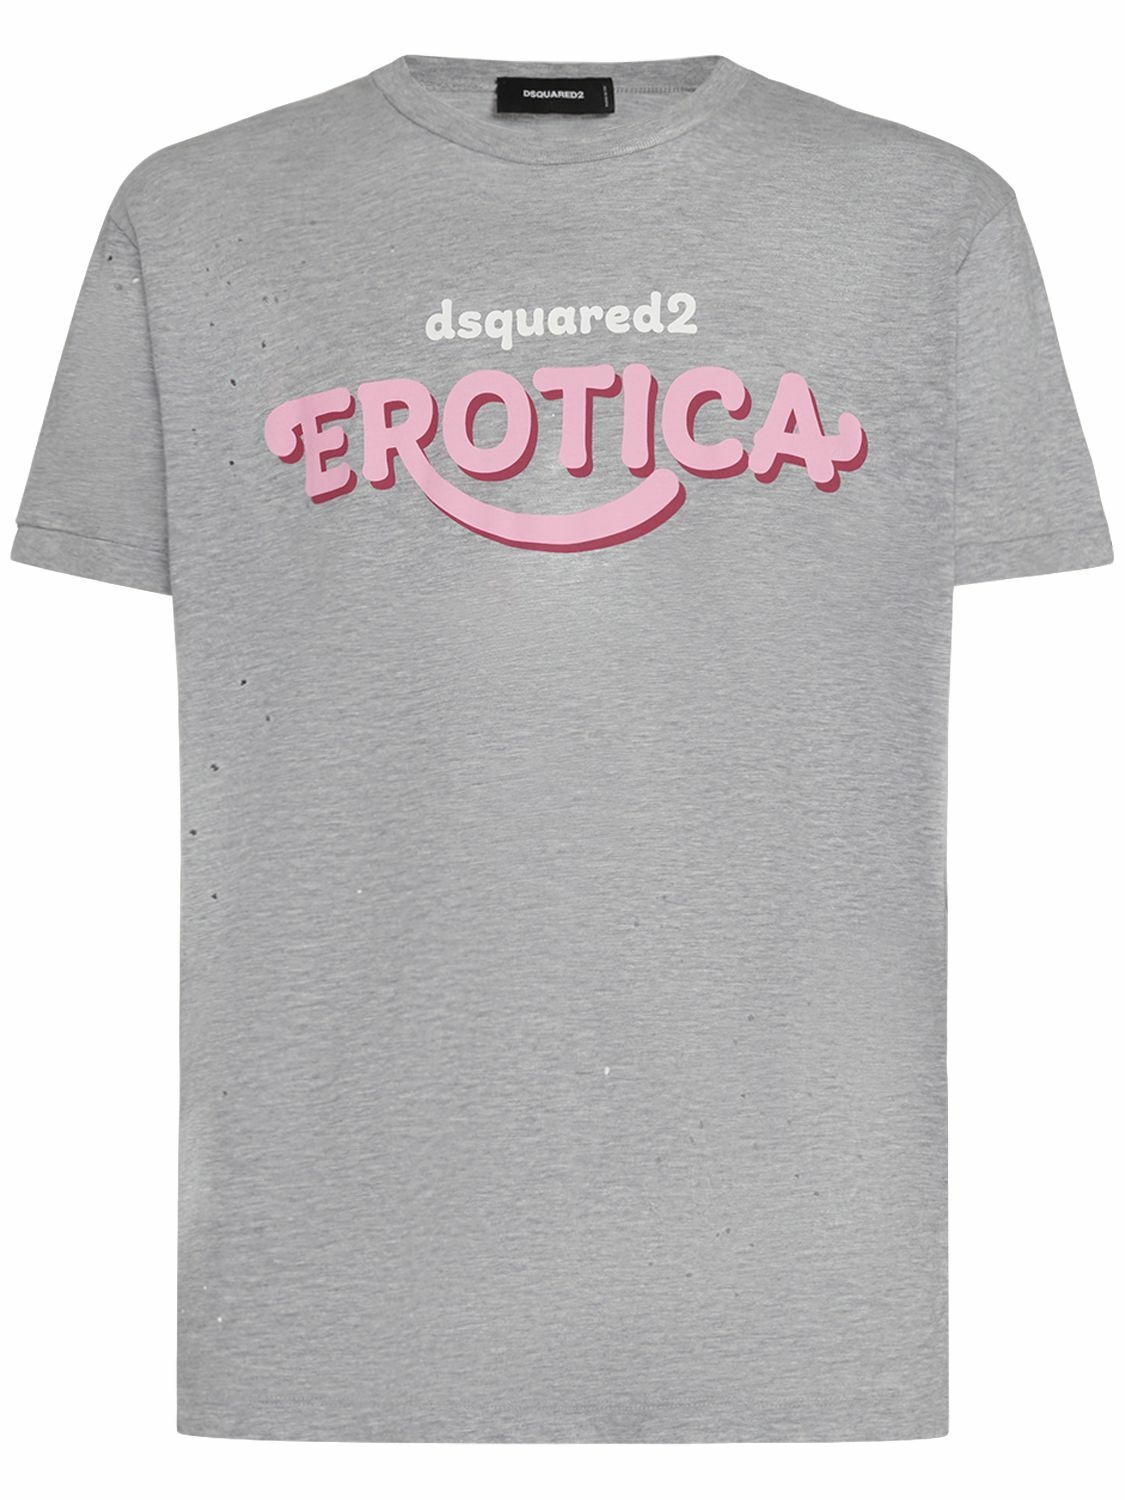 Photo: DSQUARED2 - Erotica Logo Printed Cotton T-shirt